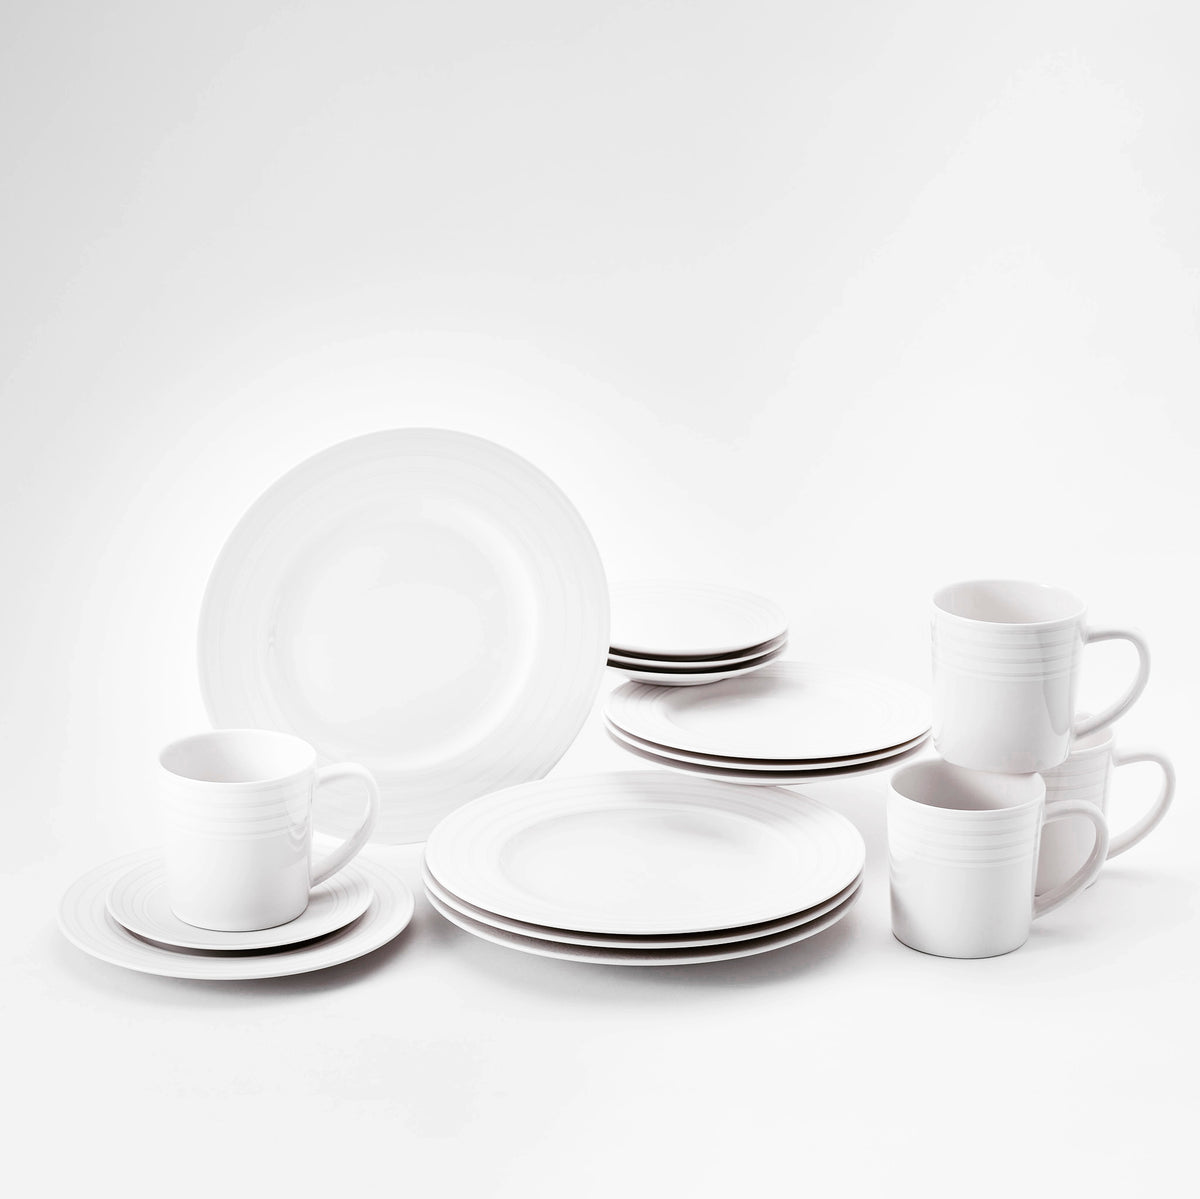 Cambridge Stripe pattern in white on white 16 piece dinnerware set from Caskata